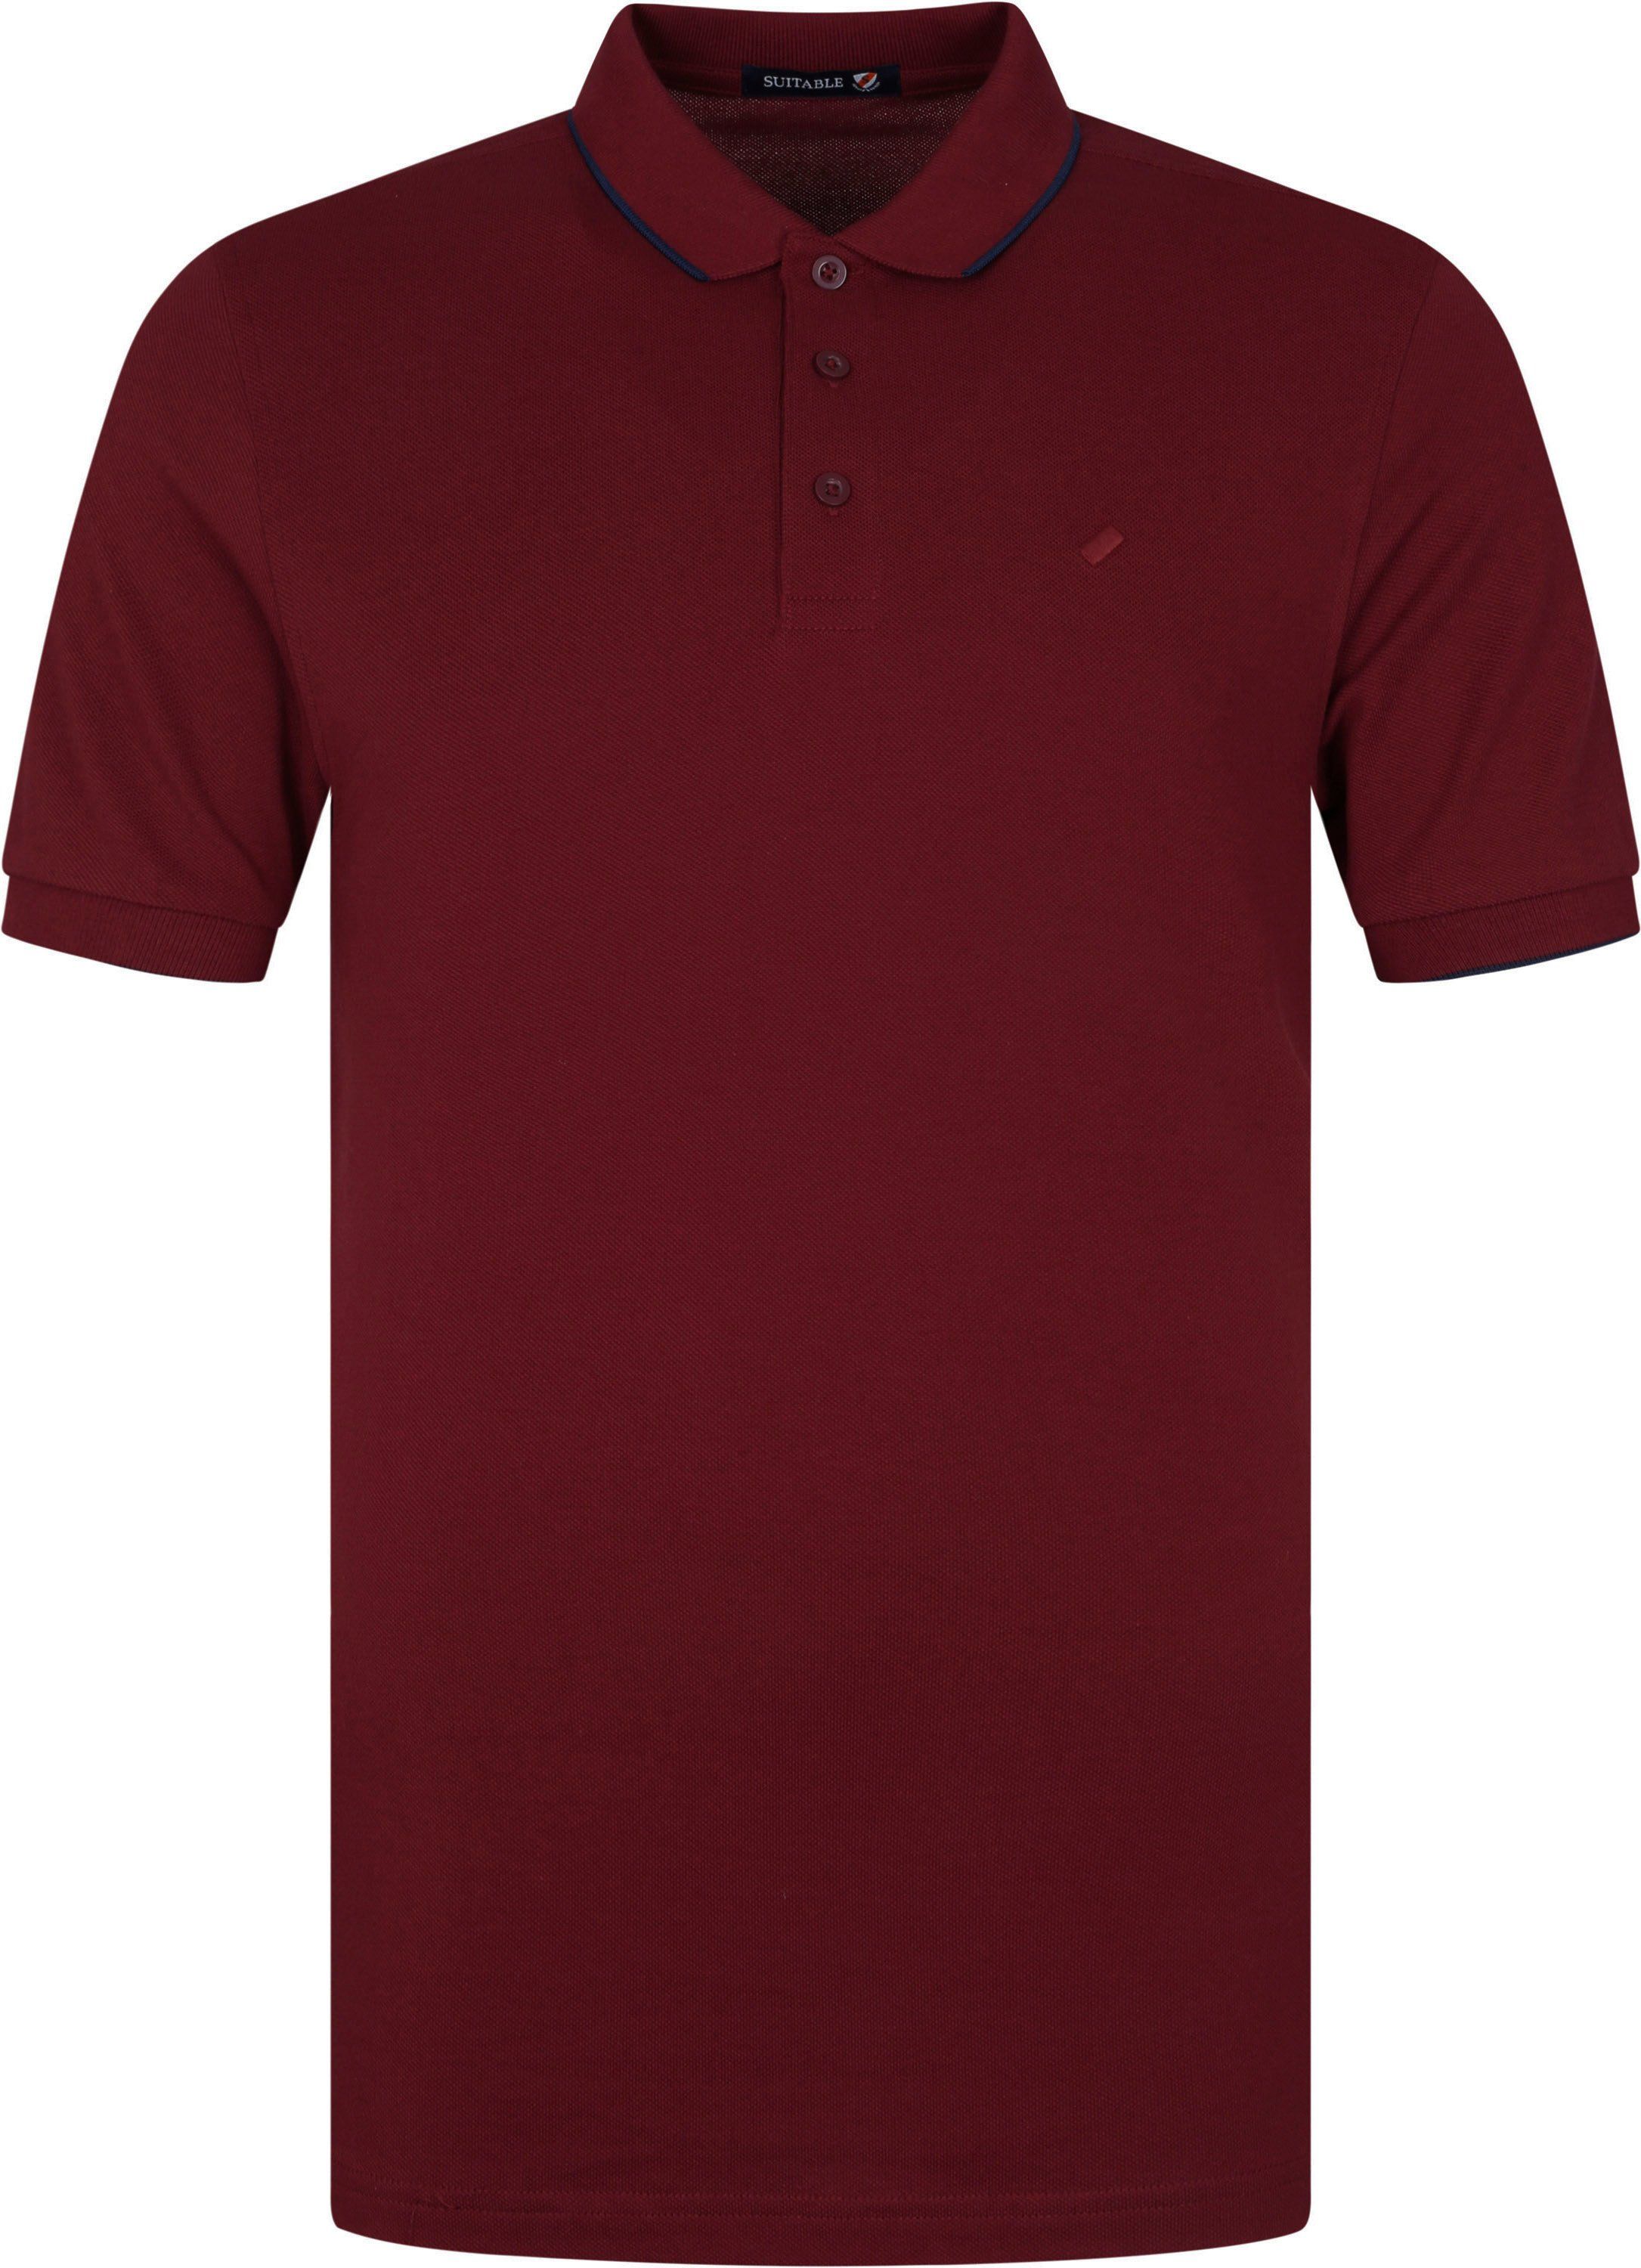 Suitable Poloshirt Tip Ferry Bordeaux Burgundy Red size 3XL